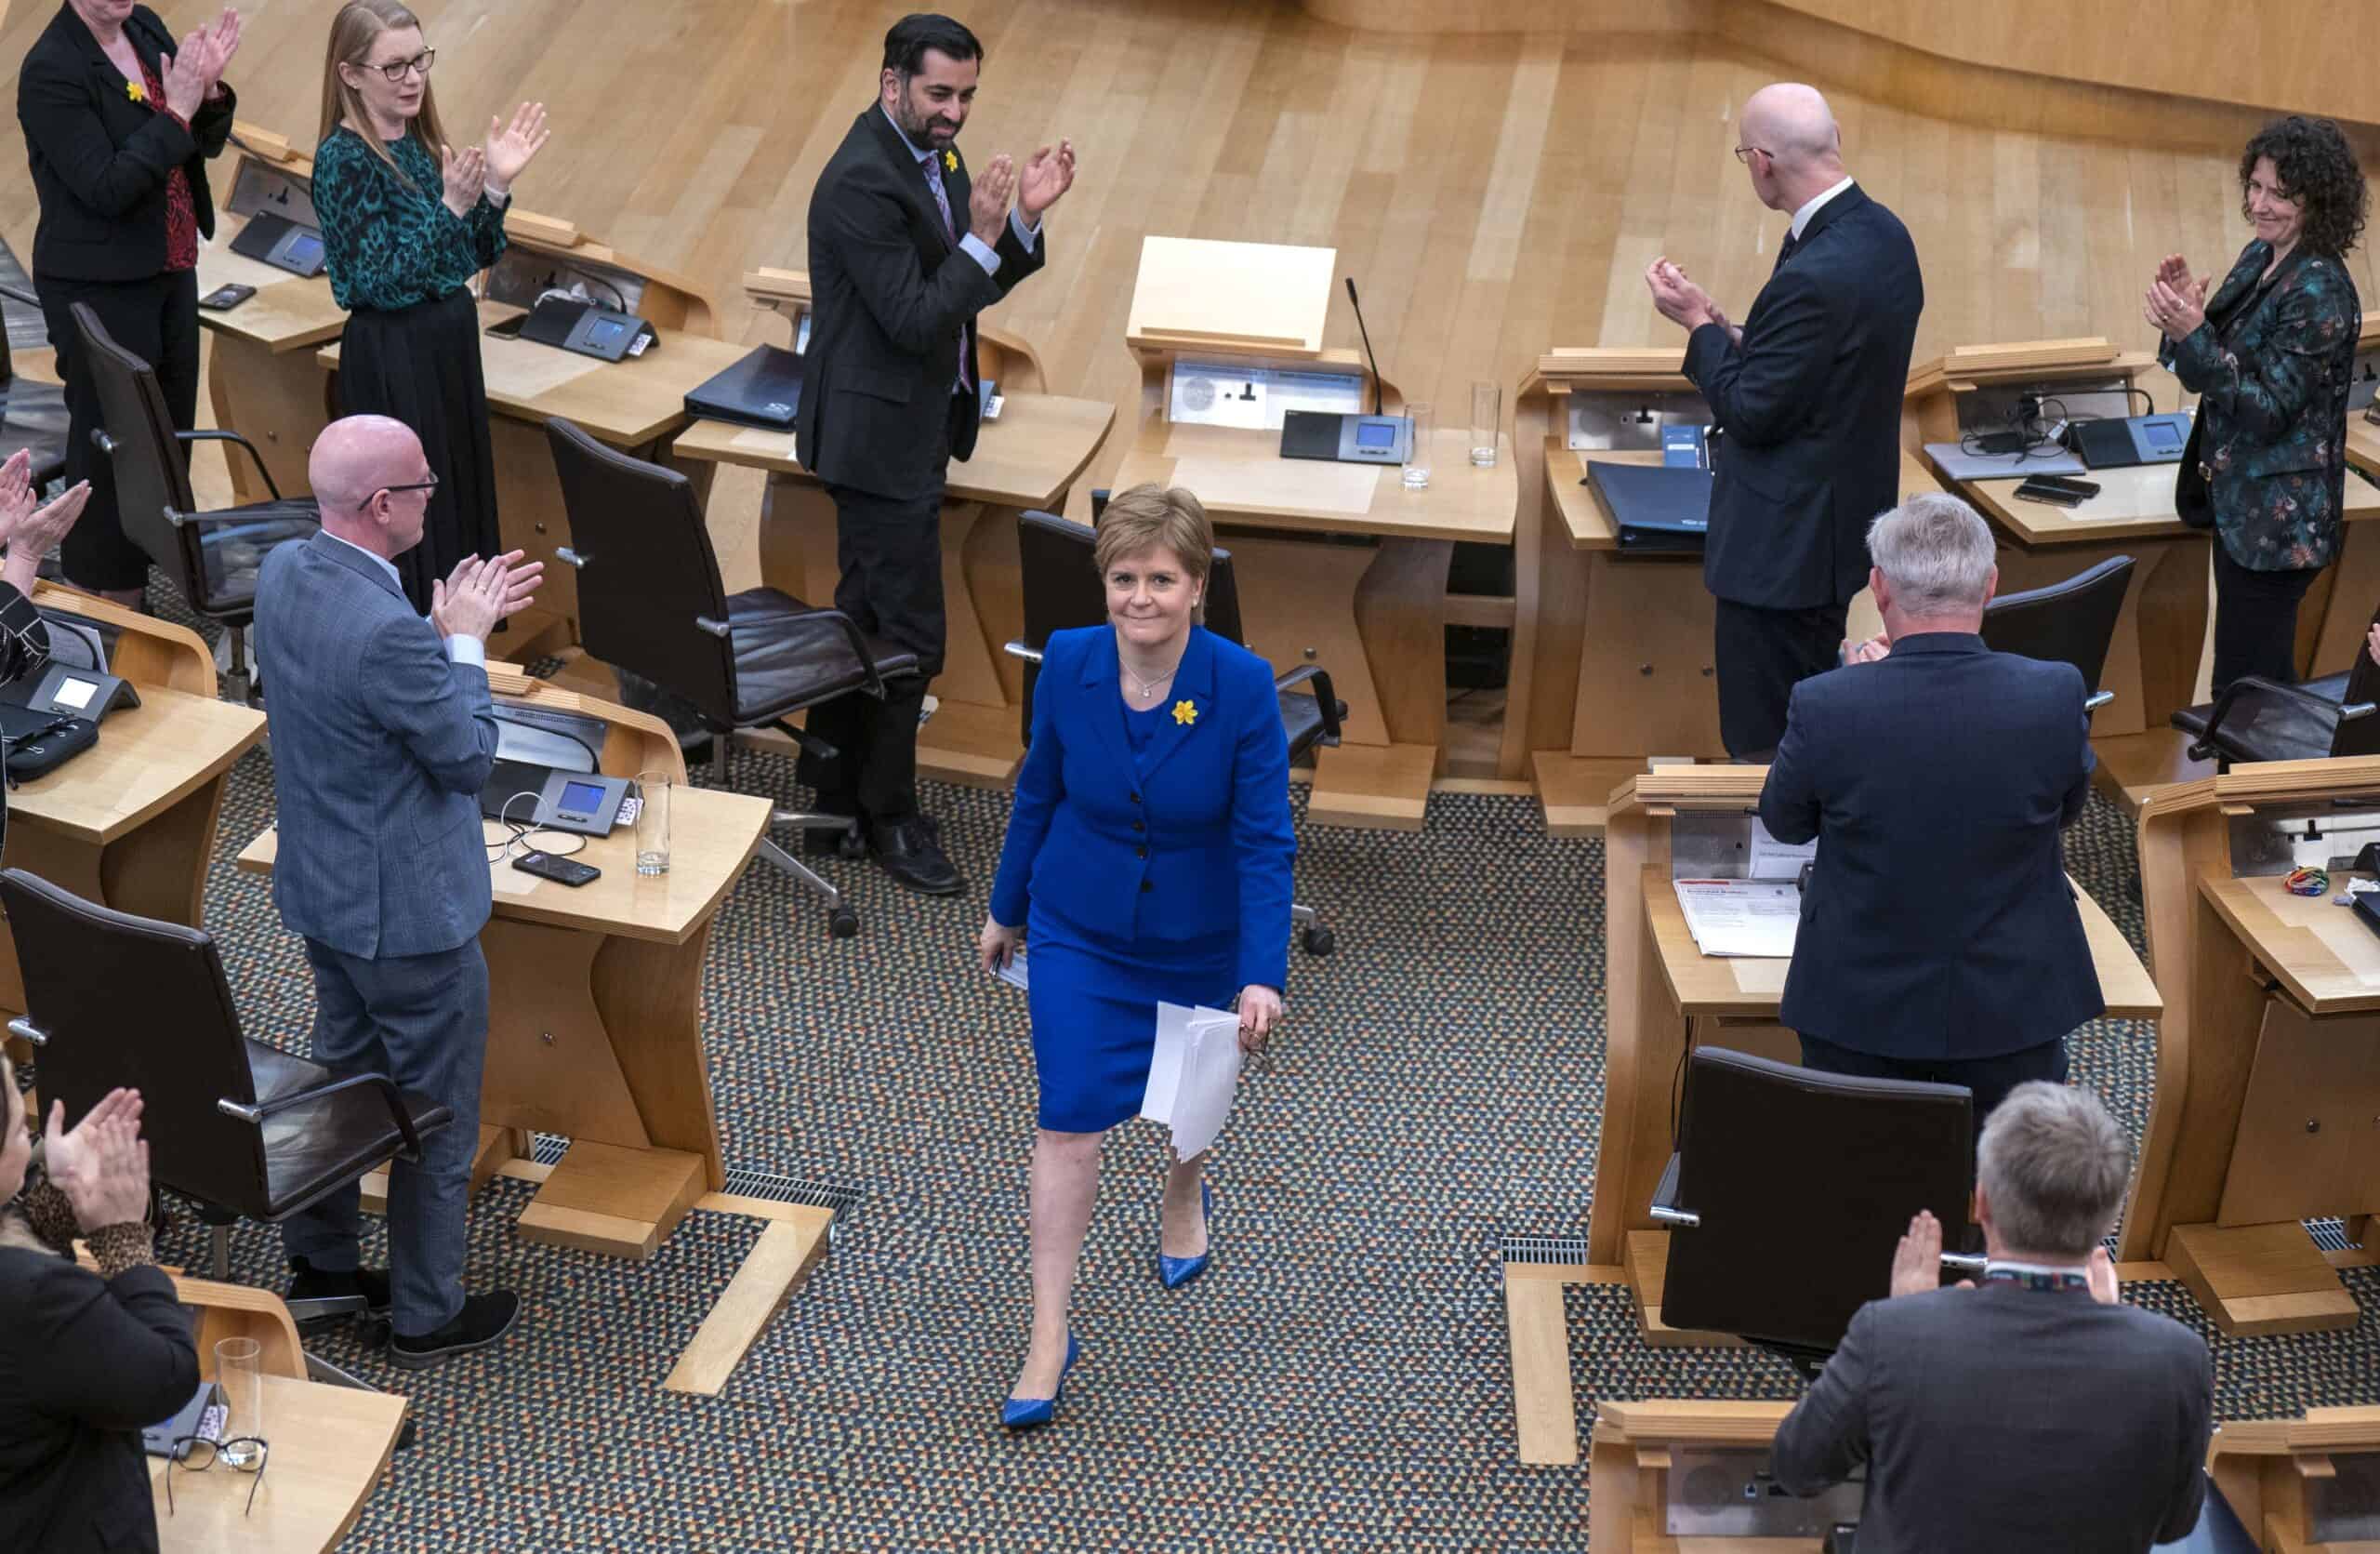 Watch: Sturgeon given standing ovation after final Holyrood speech as First Minister